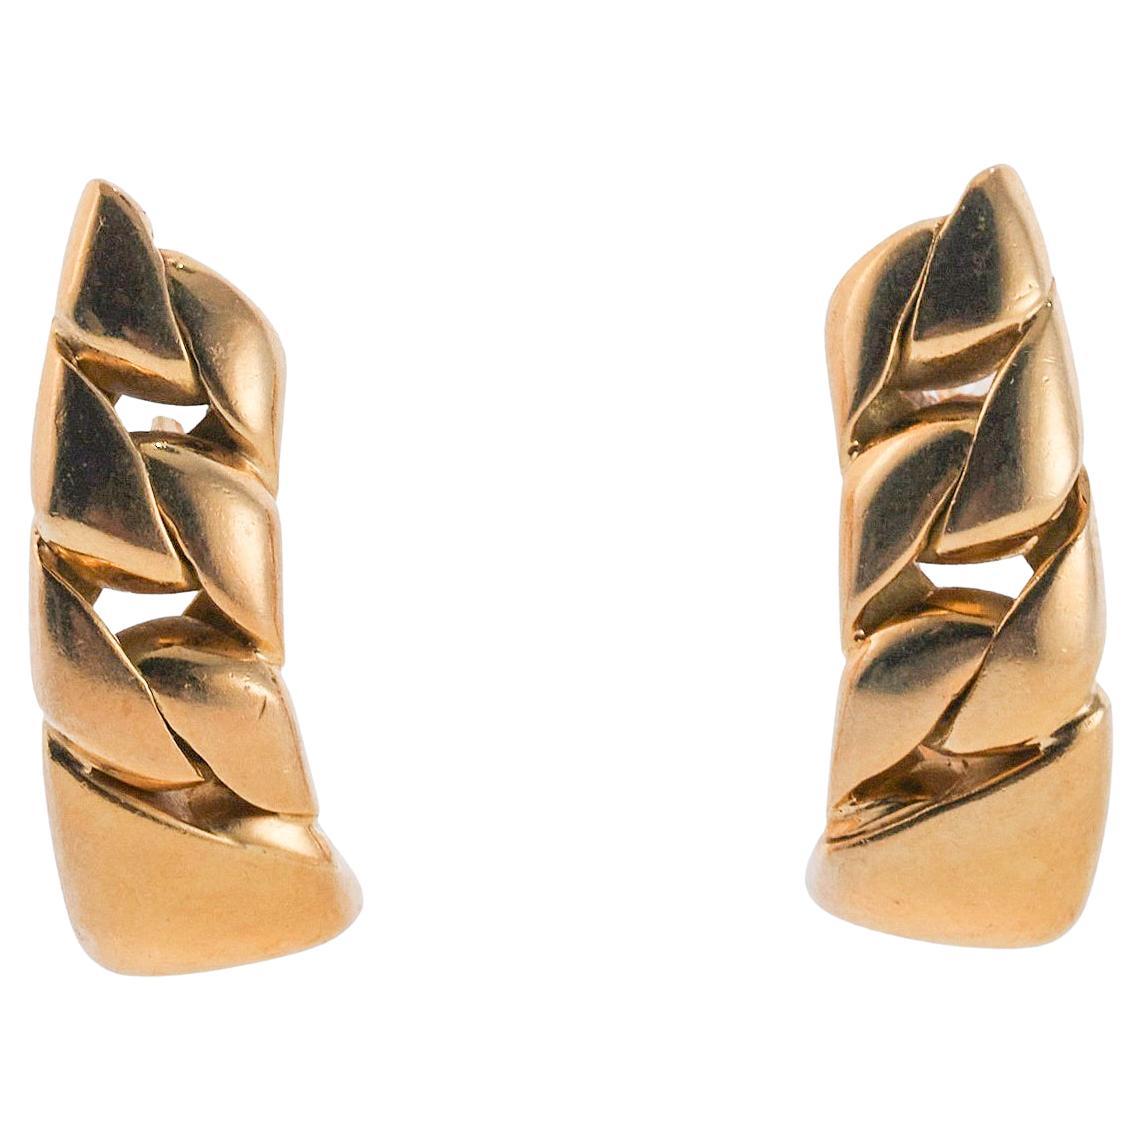 1980s Italian Gold Curb Link Earrings